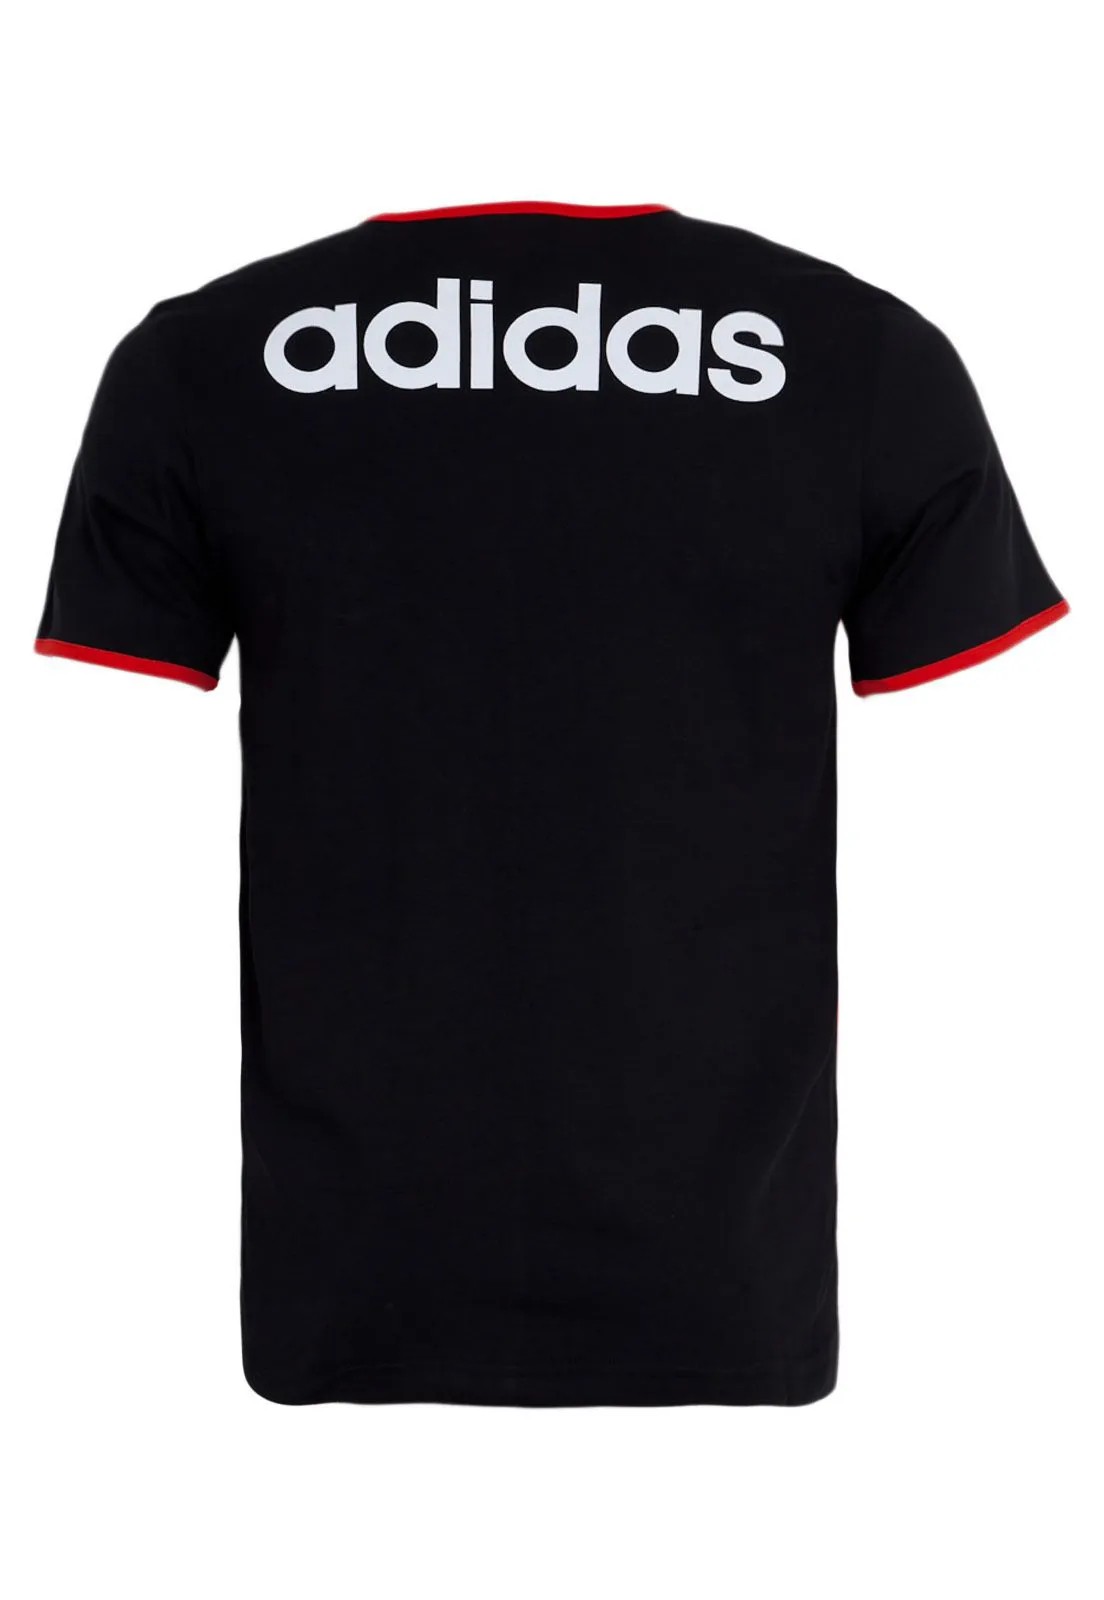 Camiseta adidas Samba Futebol Clube Ed Especial Limitada